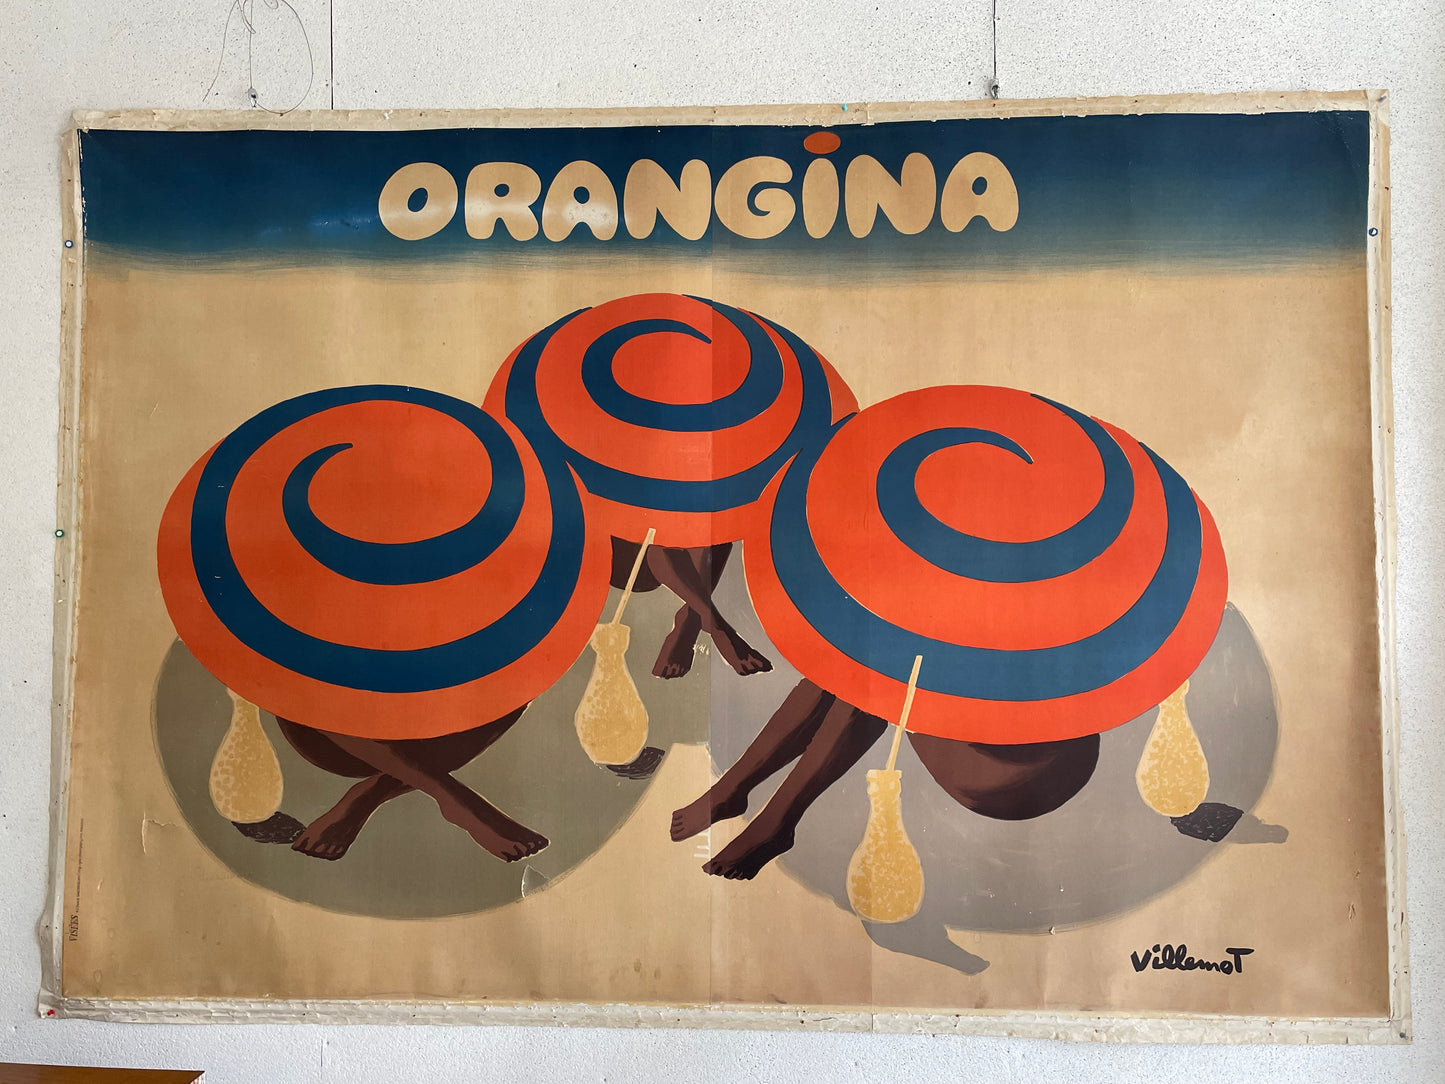 Orangina Three Umbrellas by Villemot